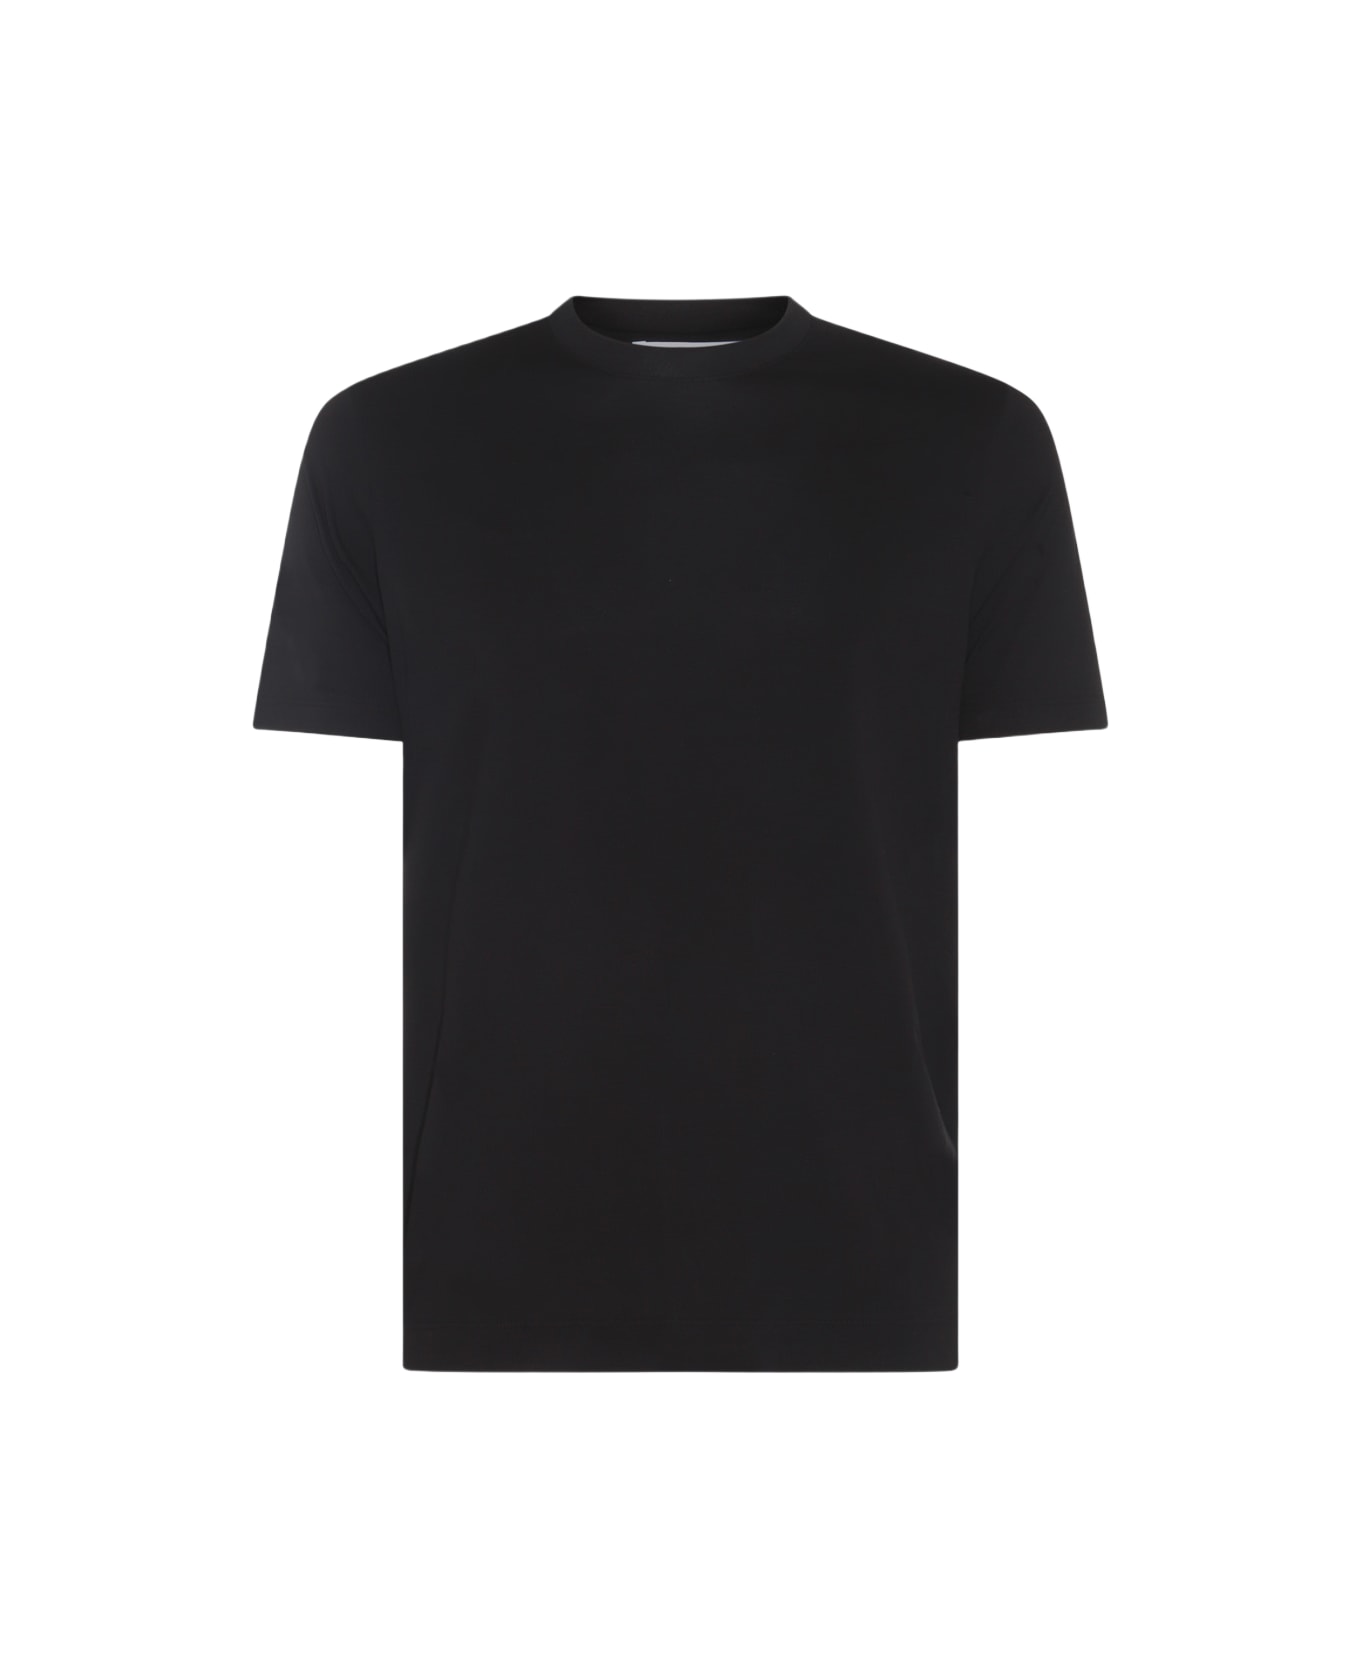 Cruciani Black Cotton Blend T-shirt - Black